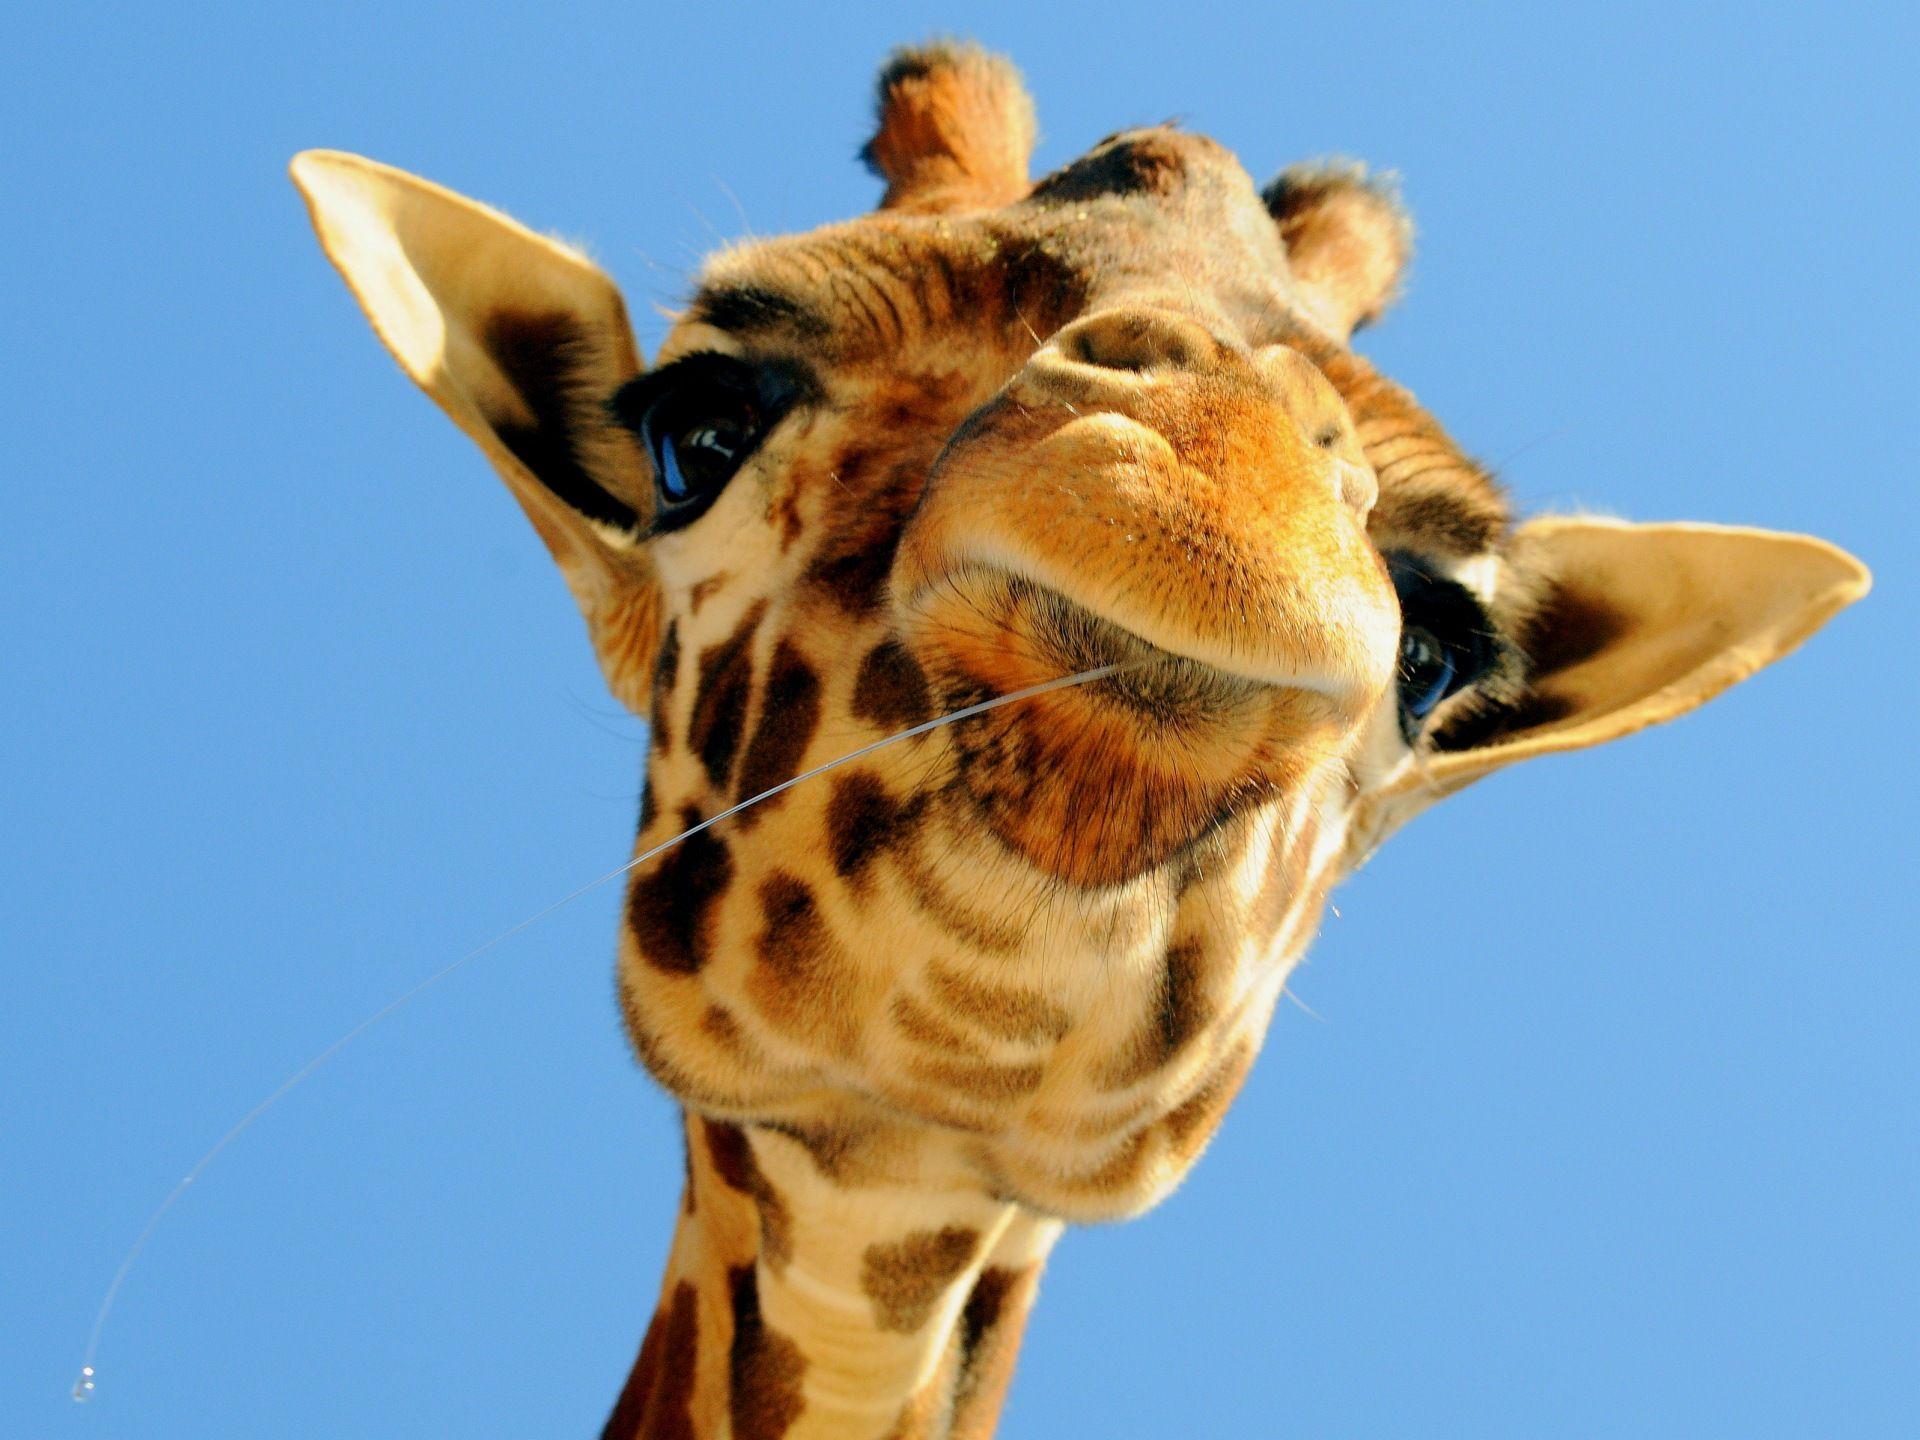 Giraffe HD Image 54403 High Resolution. download all free jpeg